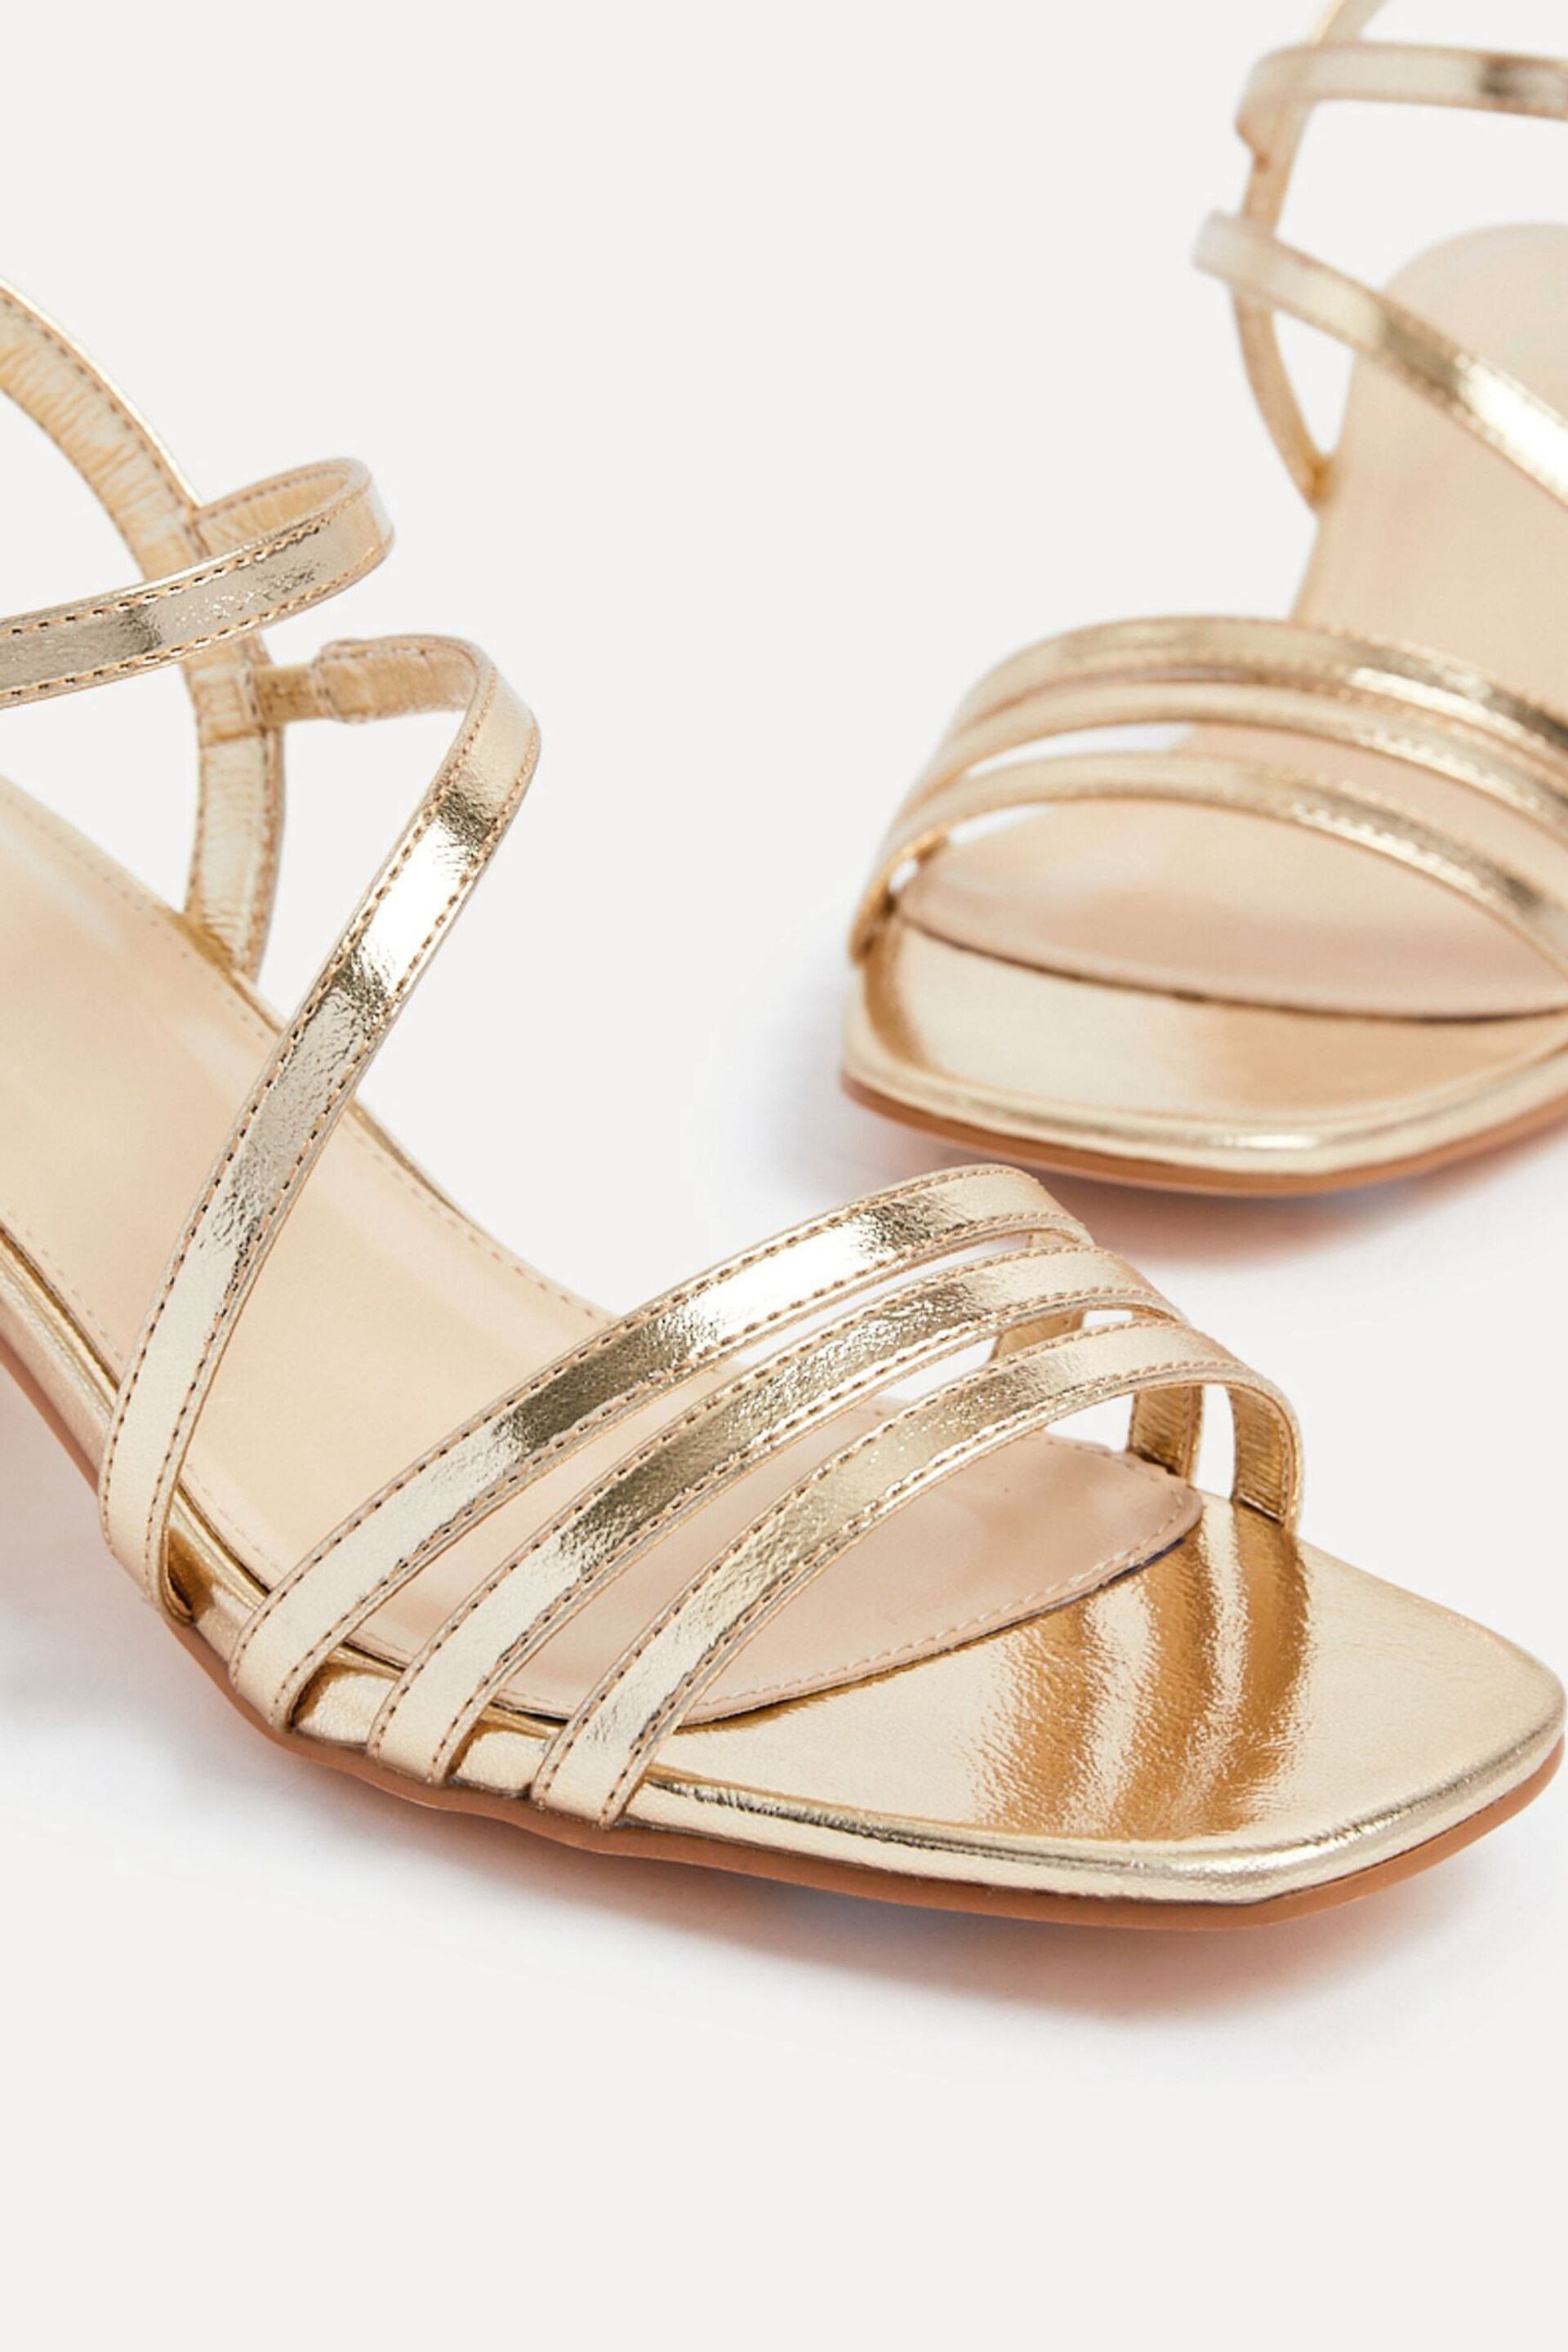 Linzi Gold Afia Strappy Block Heel Sandals - Image 4 of 5